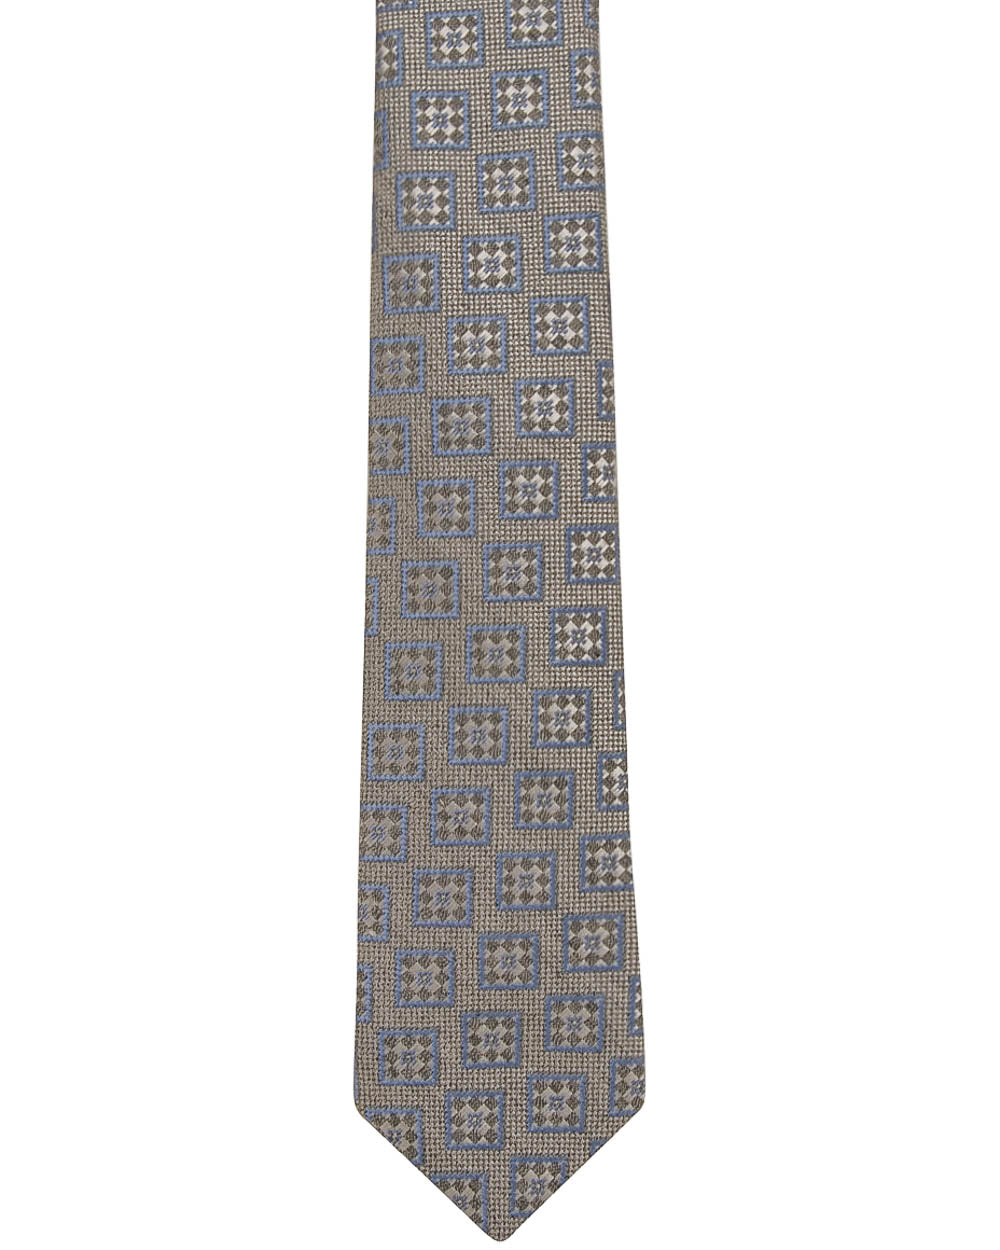 Light Blue and Light Grey Geometric Tie